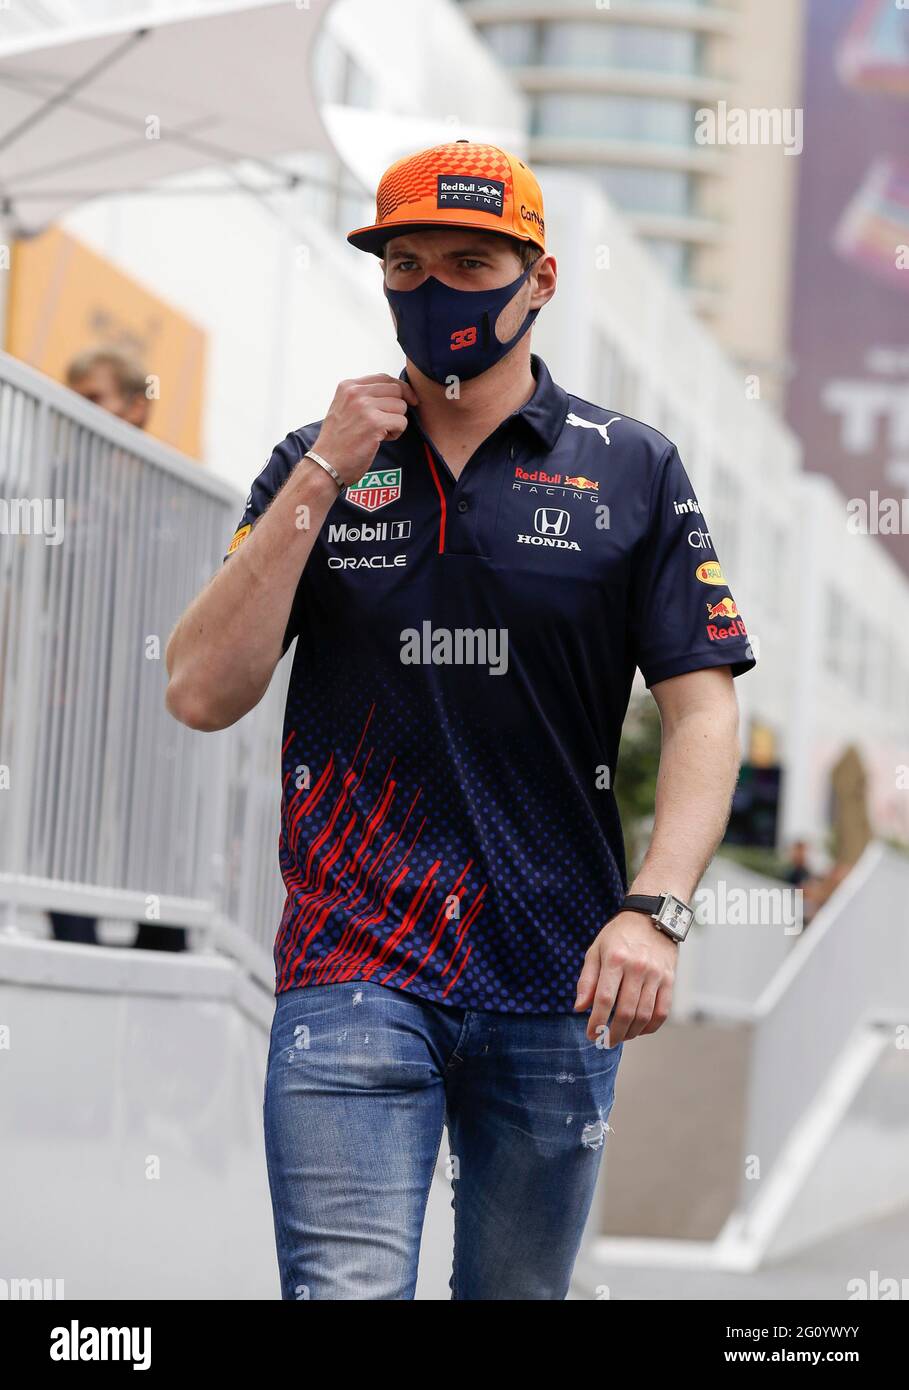 Baku, Azerbaijan. 4th June, 2021. # 33 Verstappen (NED, Red Bull Racing), F1 Prix of Azerbaijan at Baku City Circuit on June 4, 2021 in Azerbaijan. (Photo by HOCH